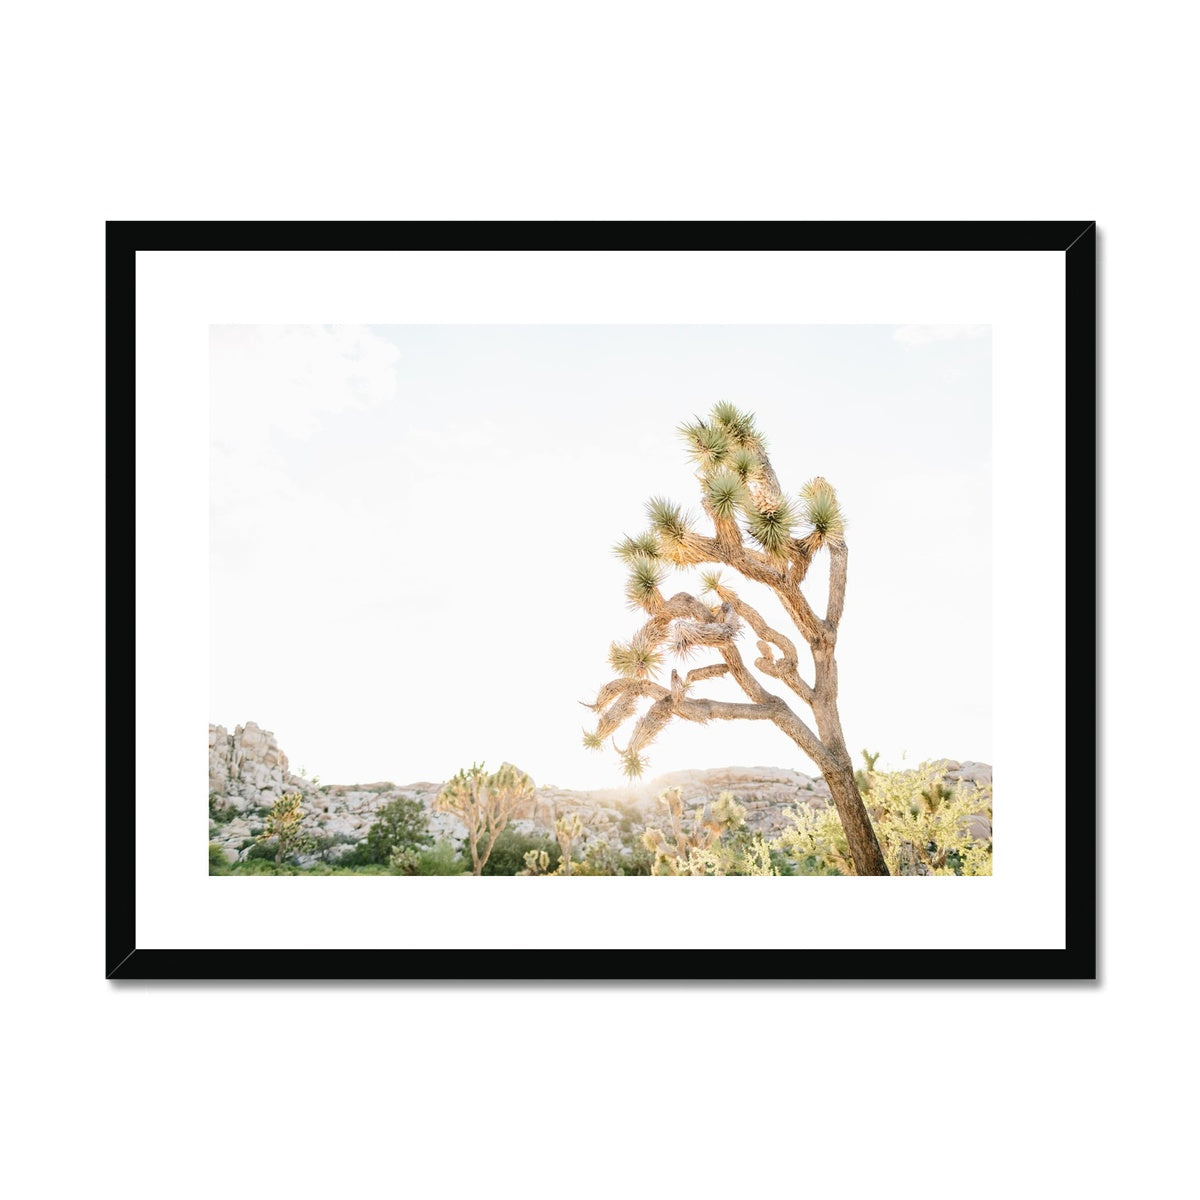 JOSHUA TREE V Framed & Mounted Print